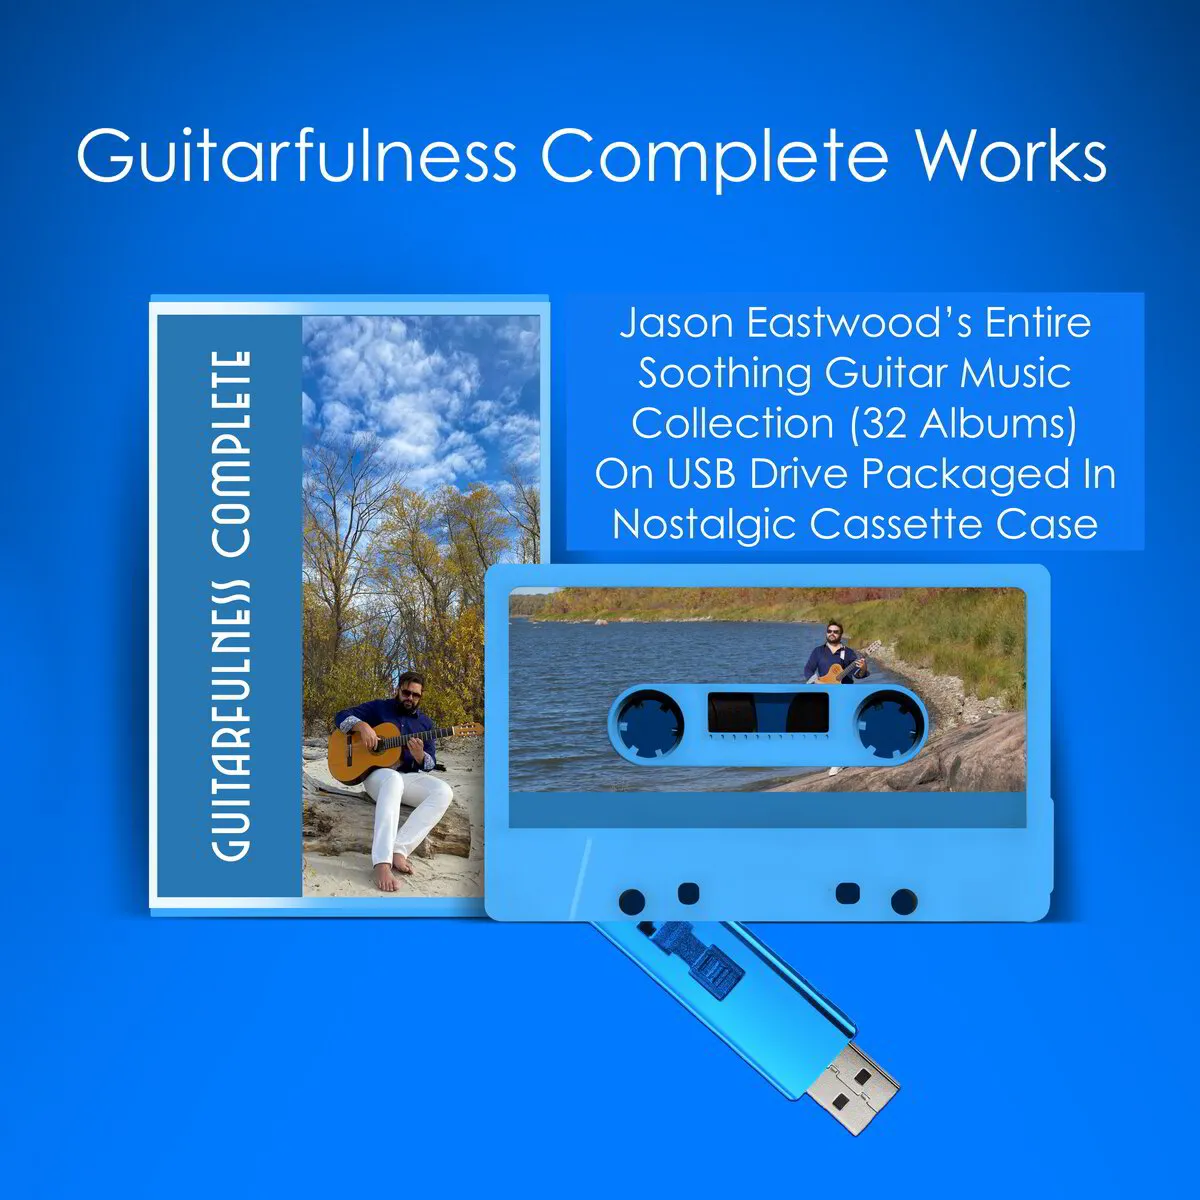 Guitarfulness Complete USB